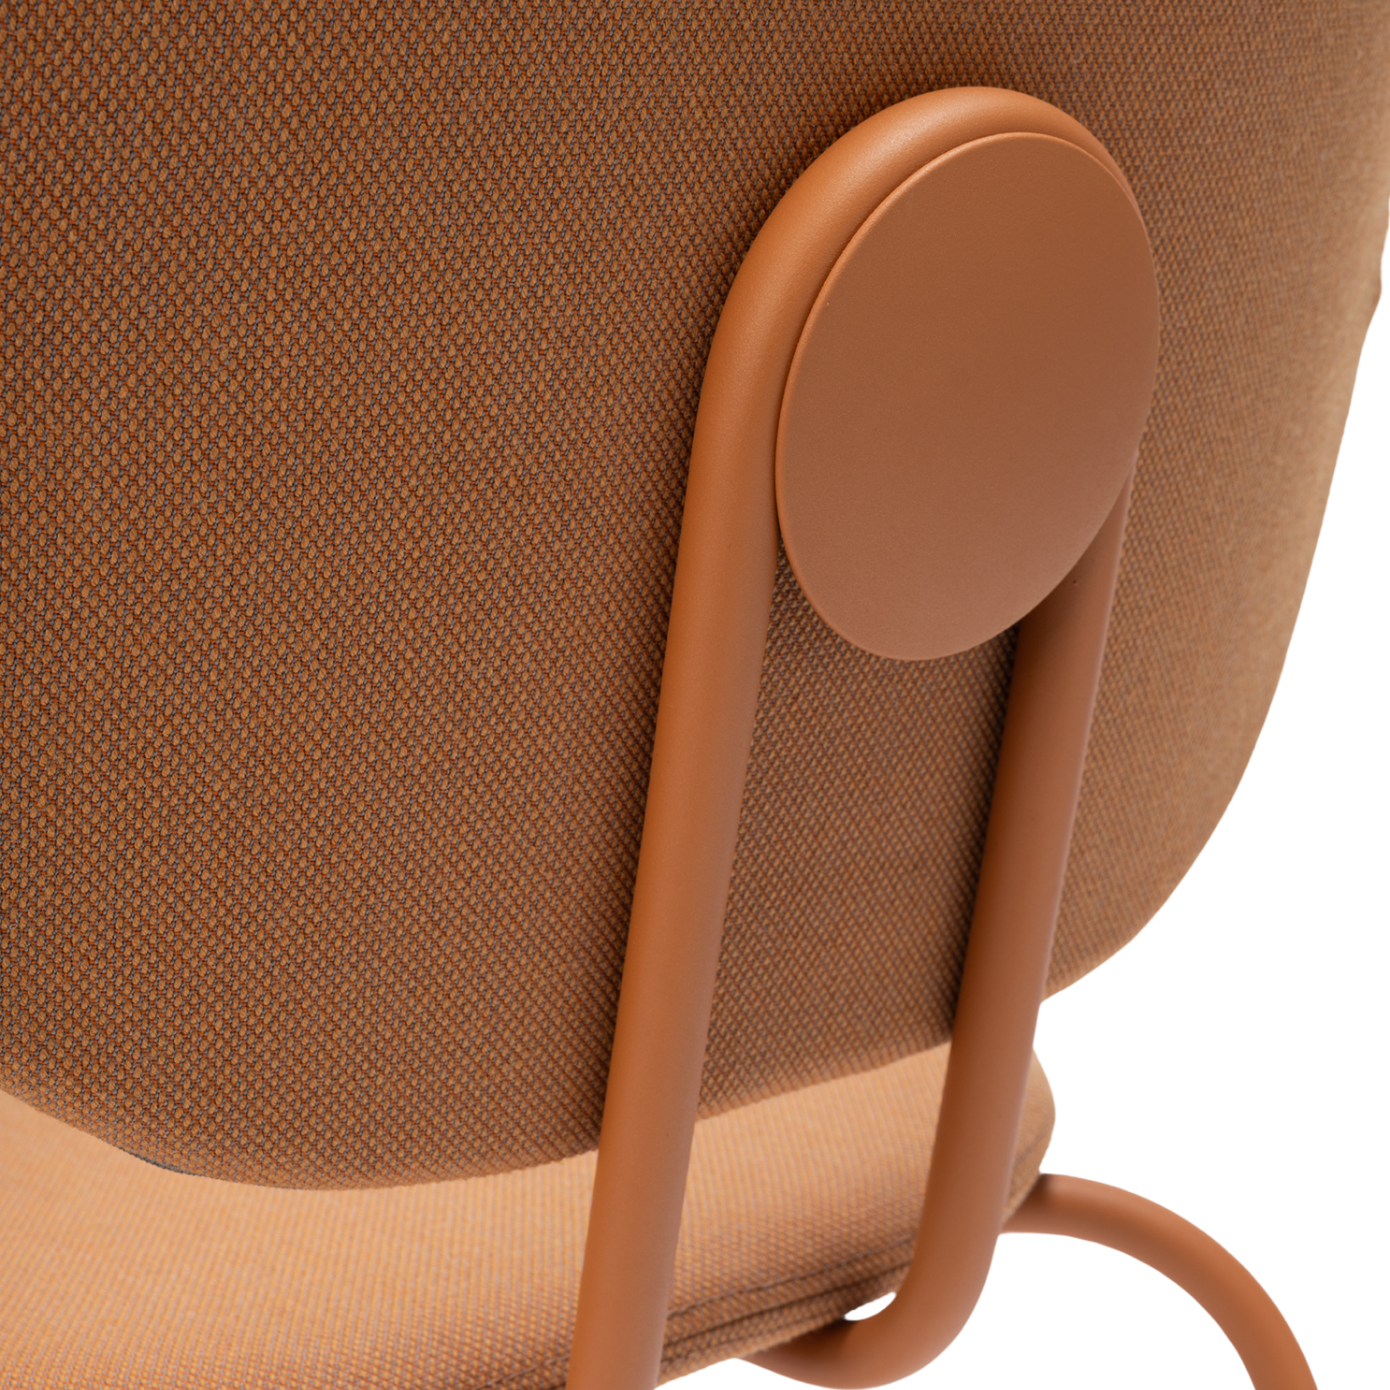 Hari Chair Fabric A - Epoxy Linen